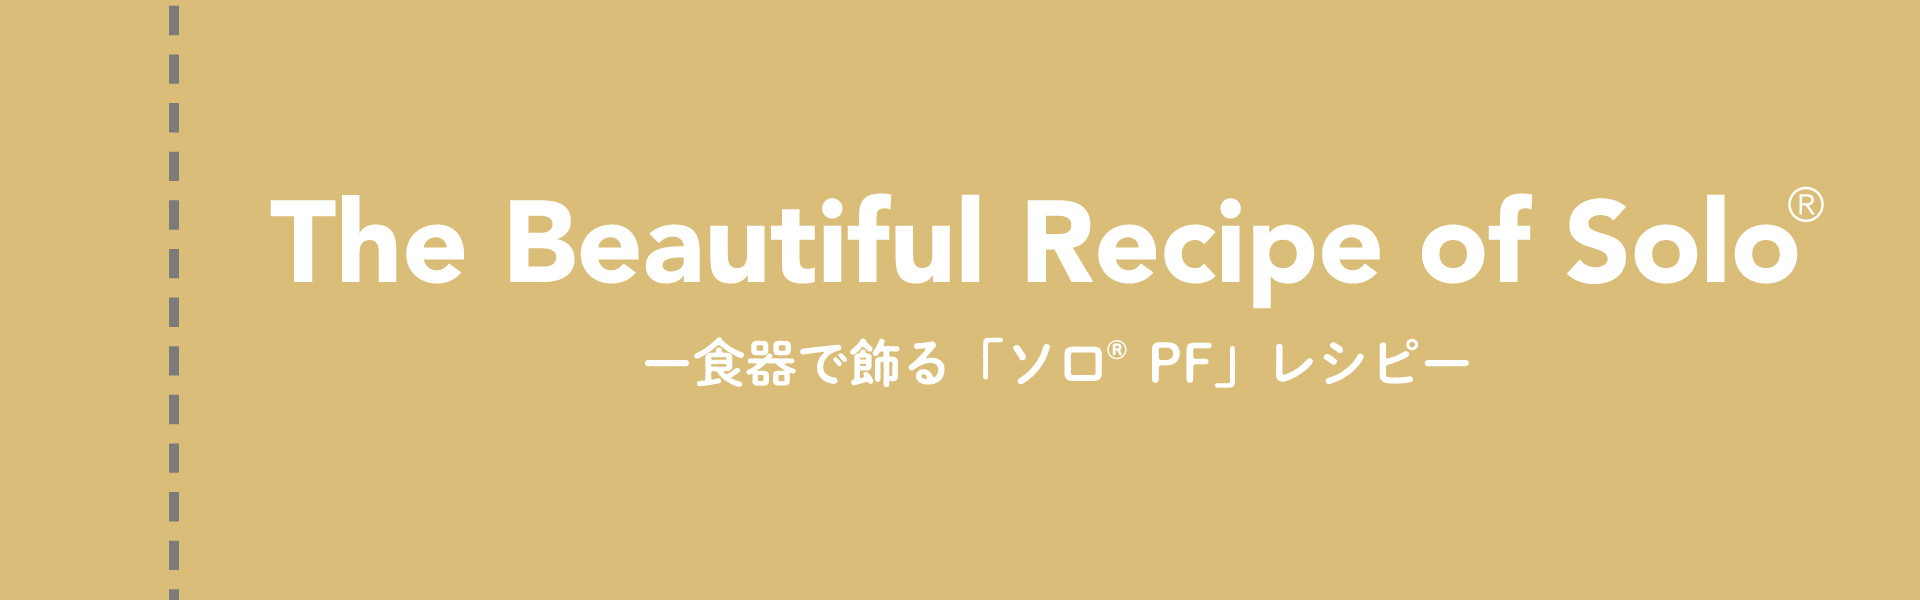 The Beautiful Recipe of Solo -食器で飾る「ソロ PF」レシピ-